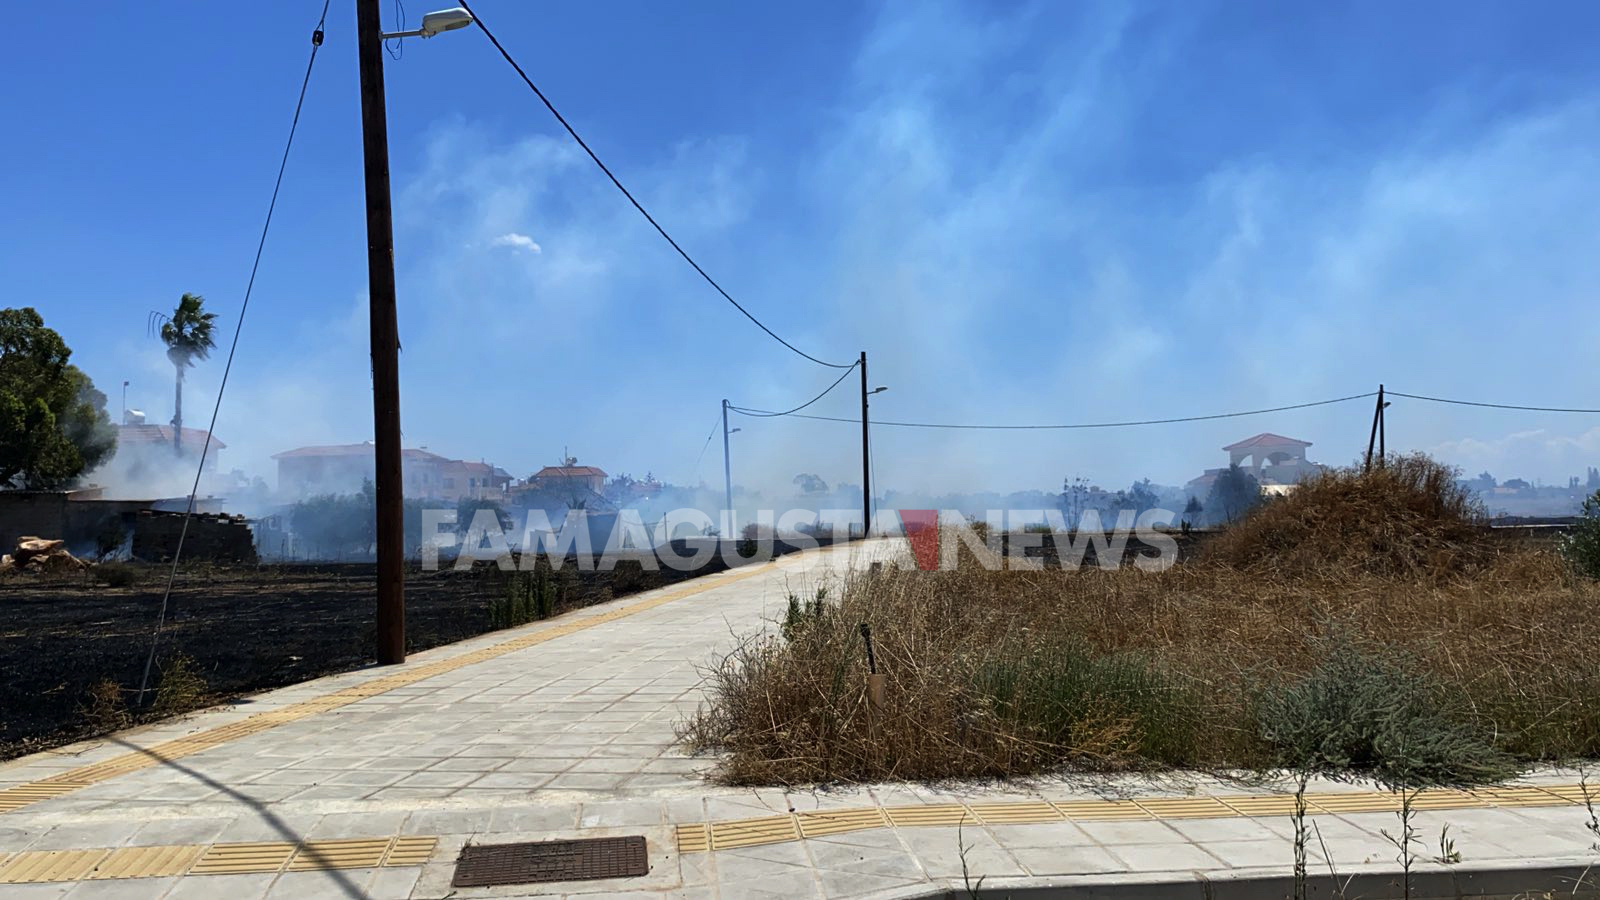 Viber image 2020 05 24 11 12 46 exclusive, Nea Famagusta, FIRE, Fire Department